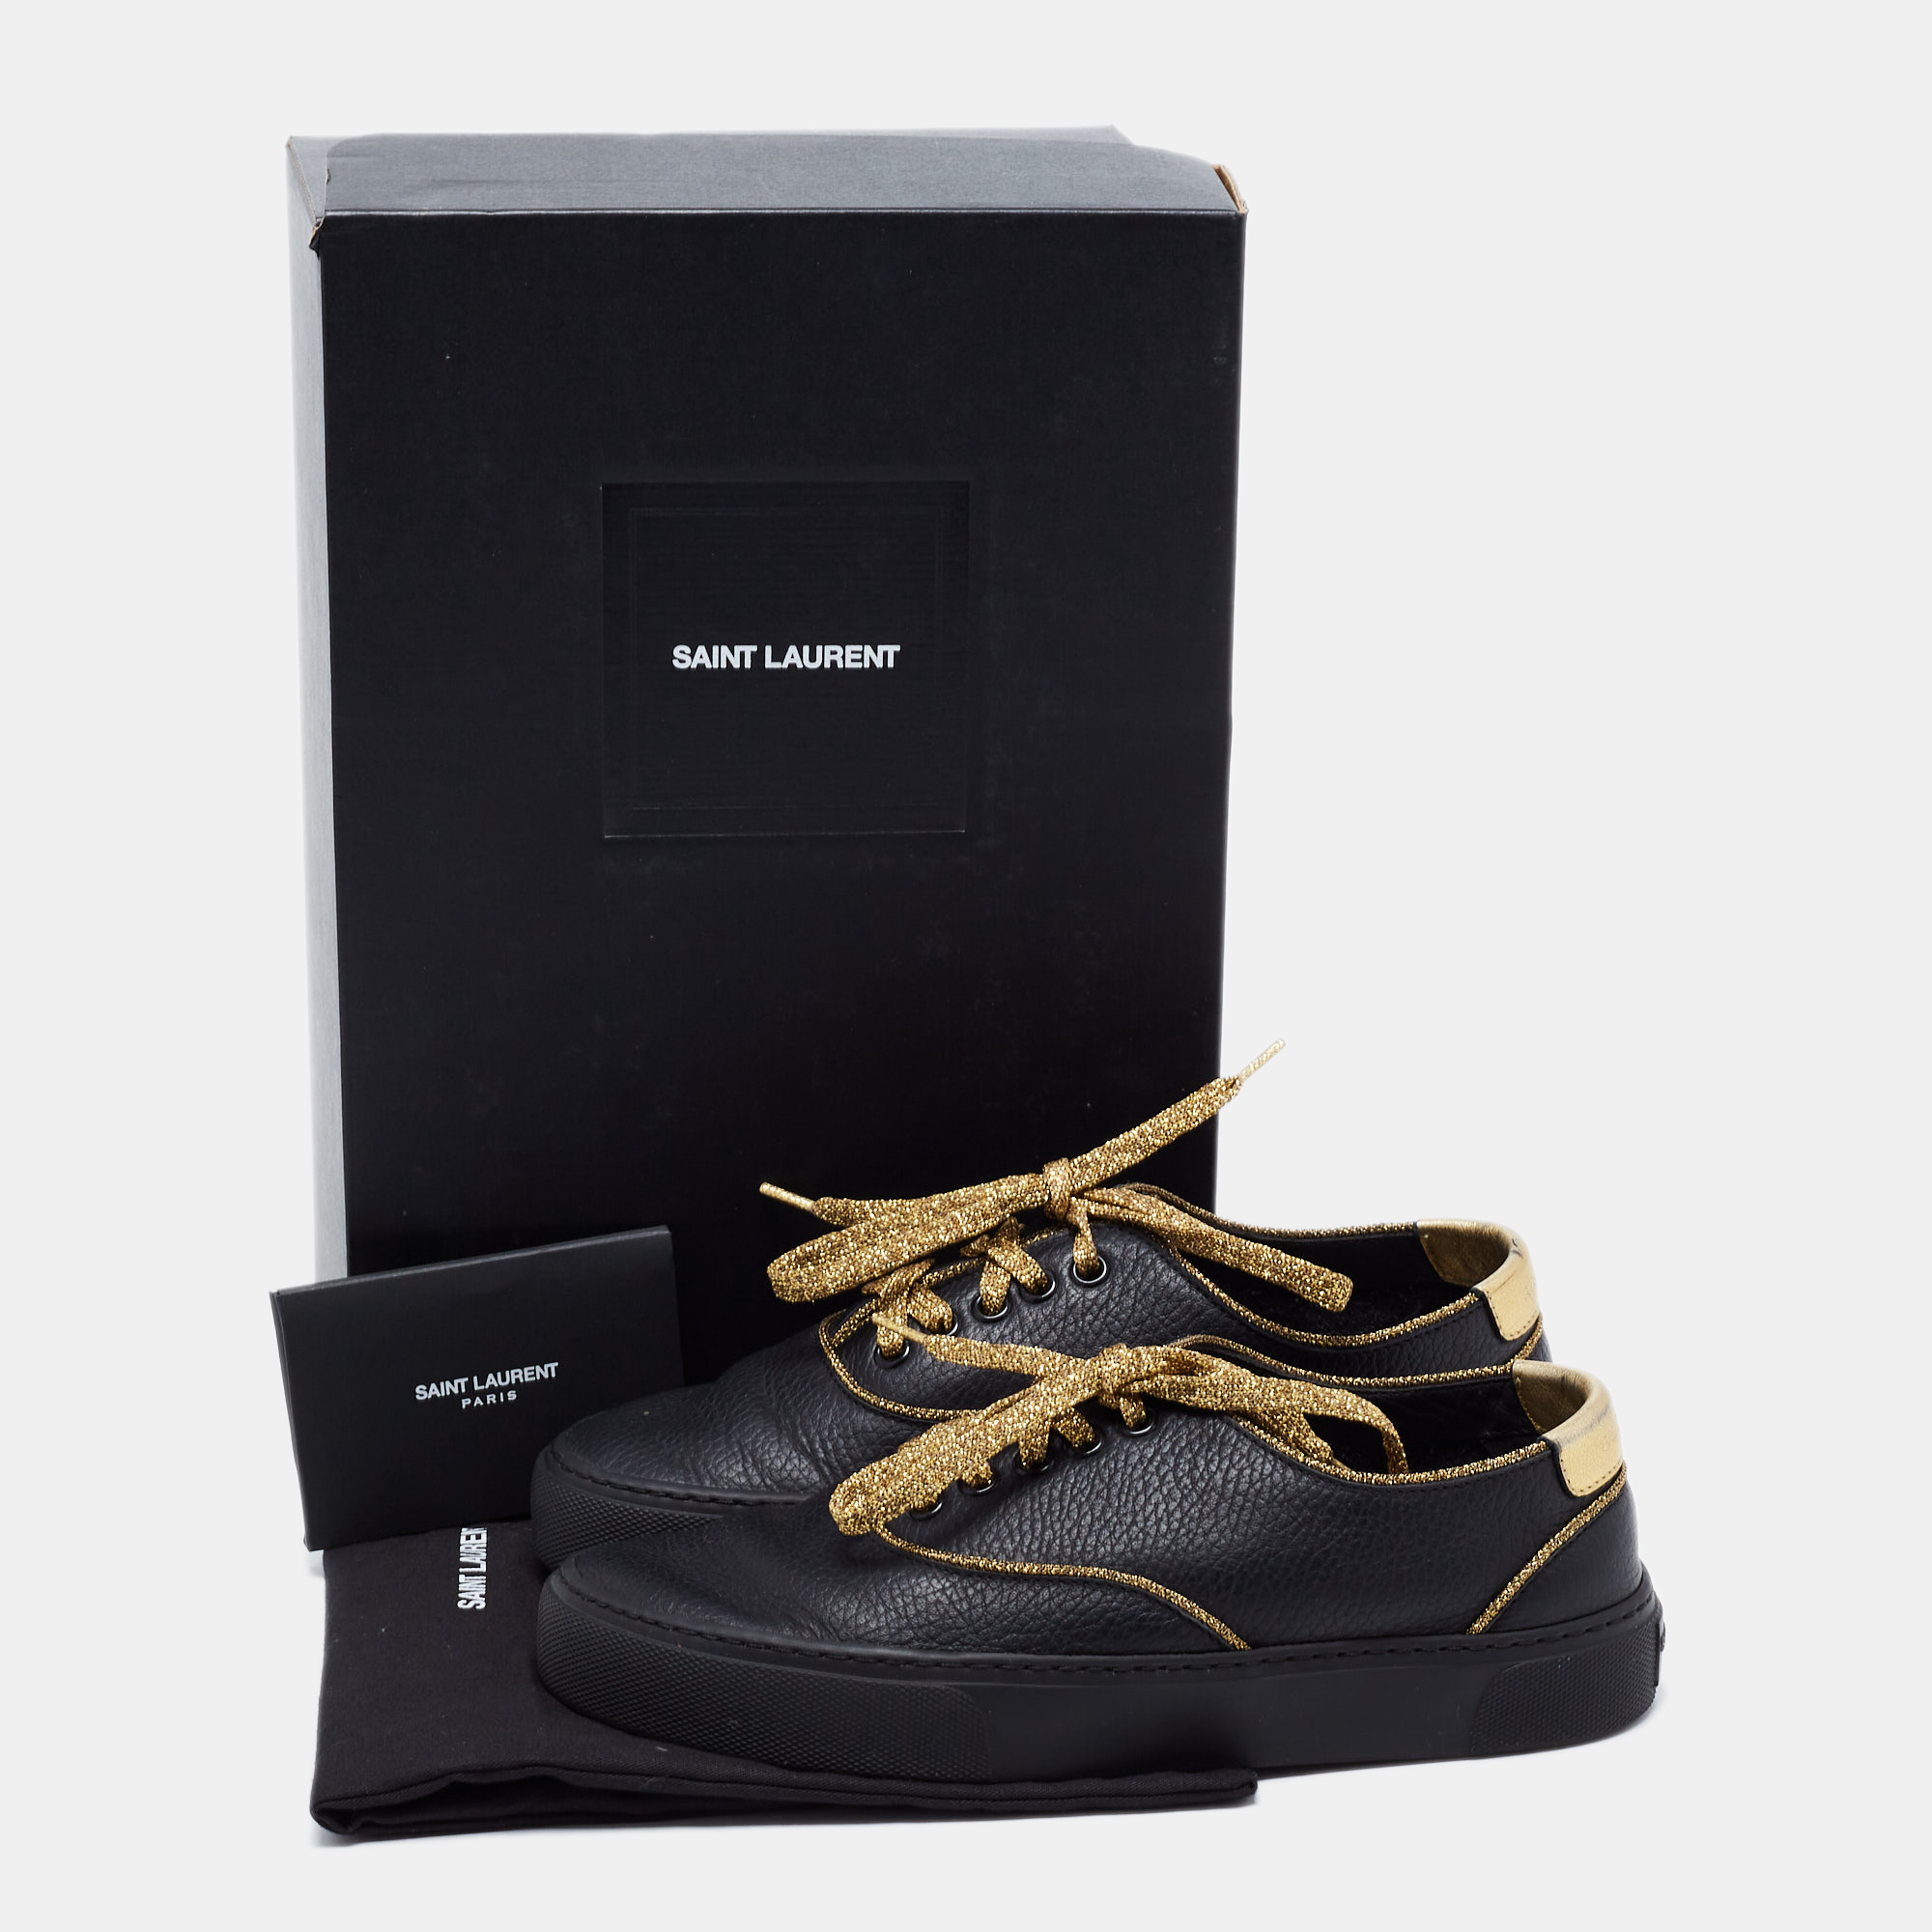 Saint Laurent Black Leather Low Top Sneakers Size 36